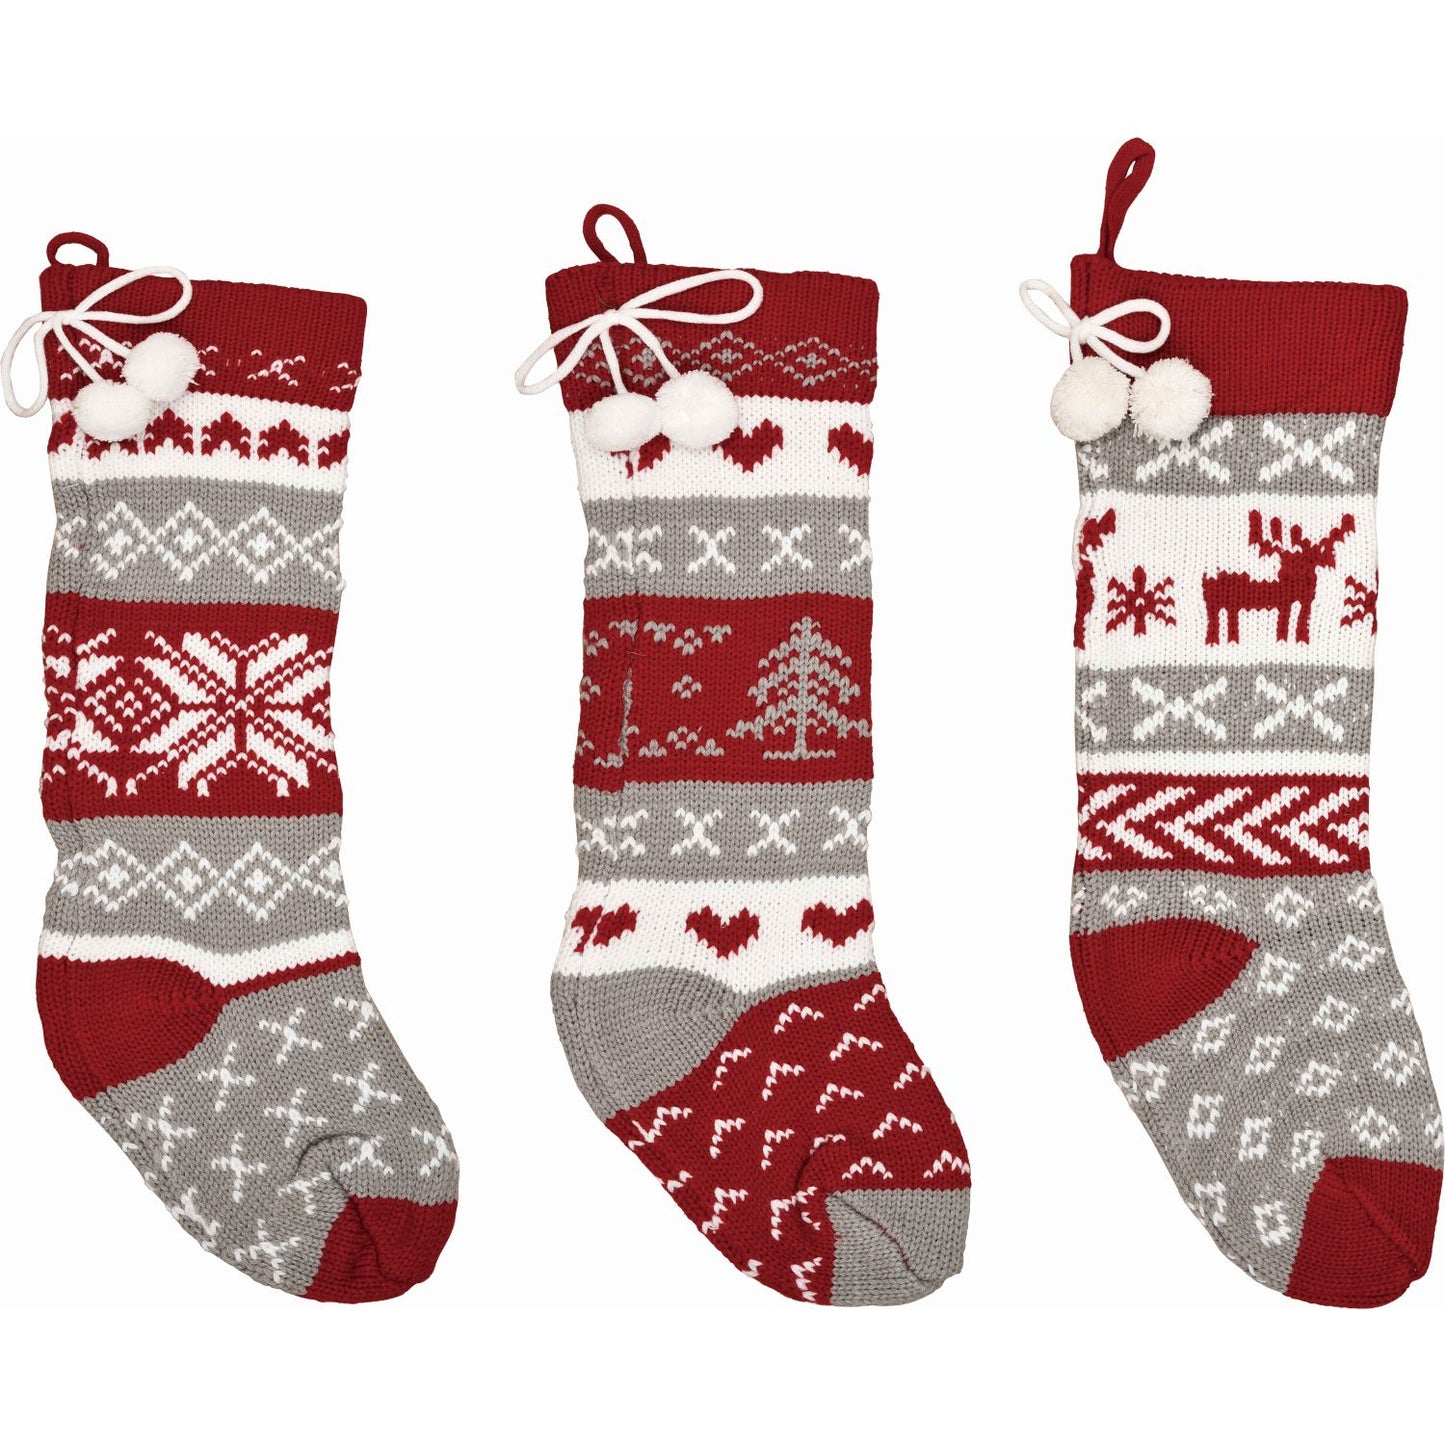 Transpac Knit Fabric Christmas Stocking, Set Of 3, Assortment